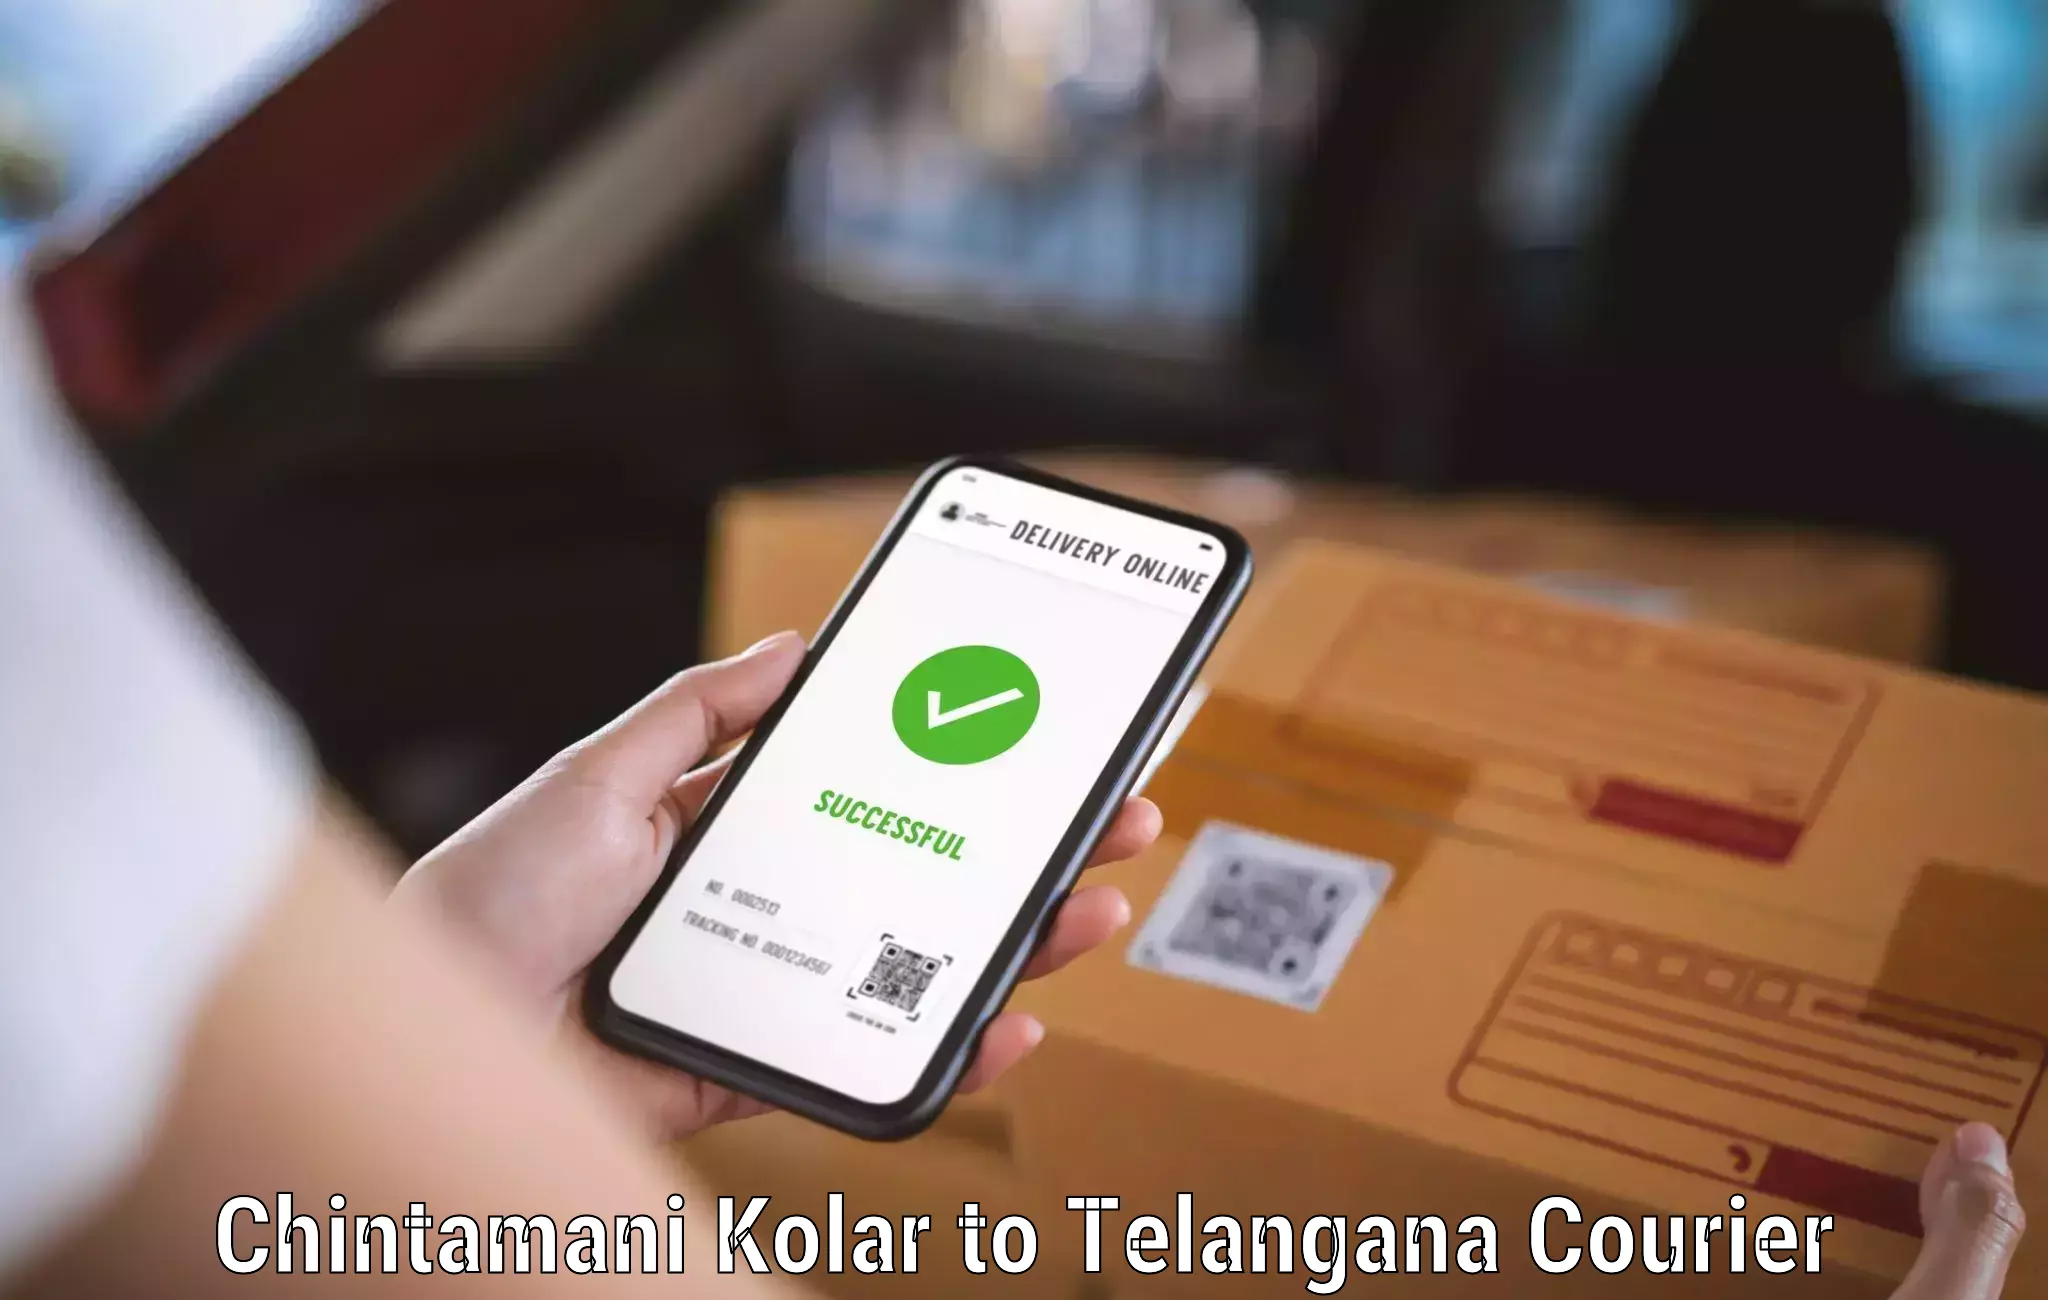 Multi-national courier services Chintamani Kolar to Secunderabad